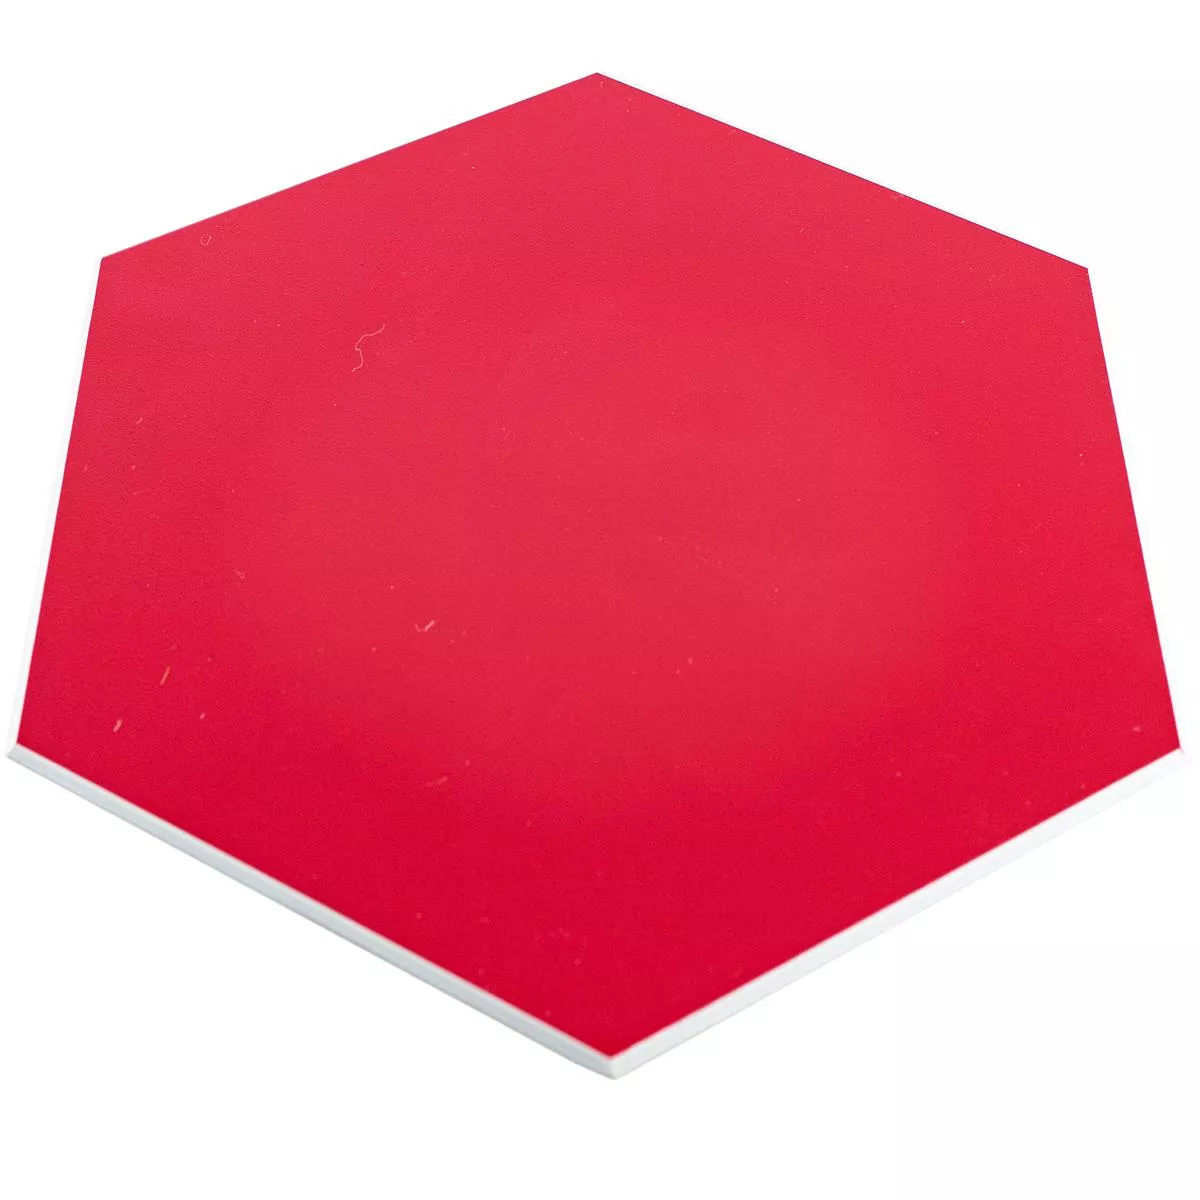 Vinyl Hexagon Wall Tile Century Self Adhesive Red